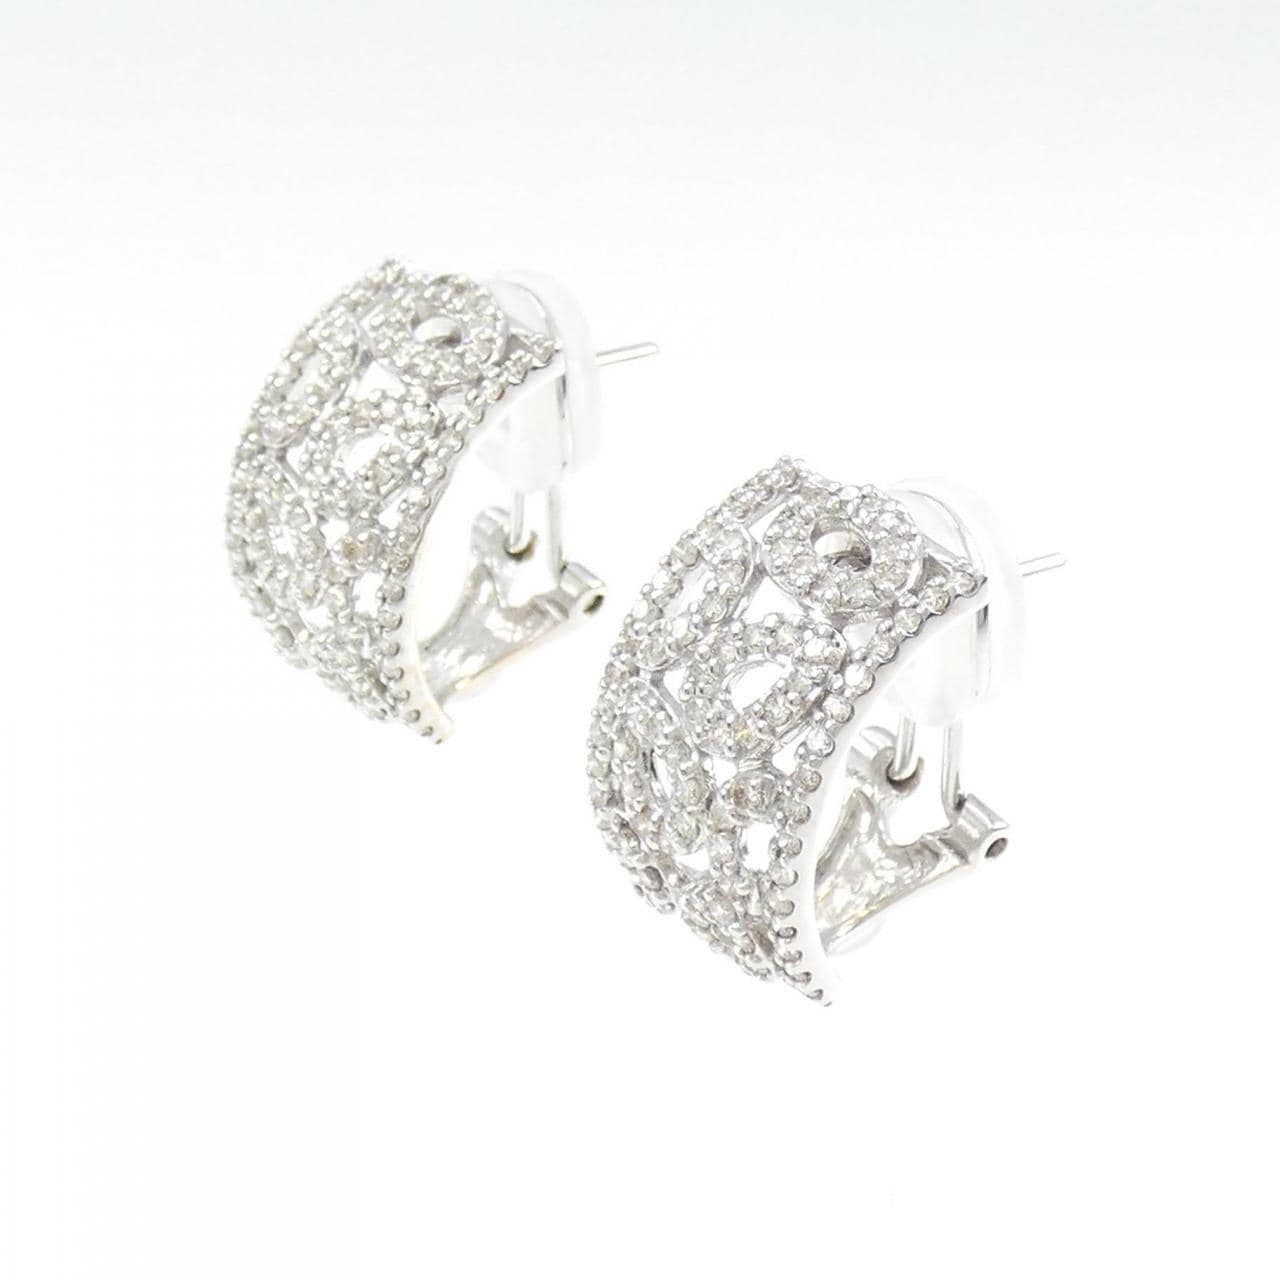 K18WG Diamond earrings/earrings 1.00CT